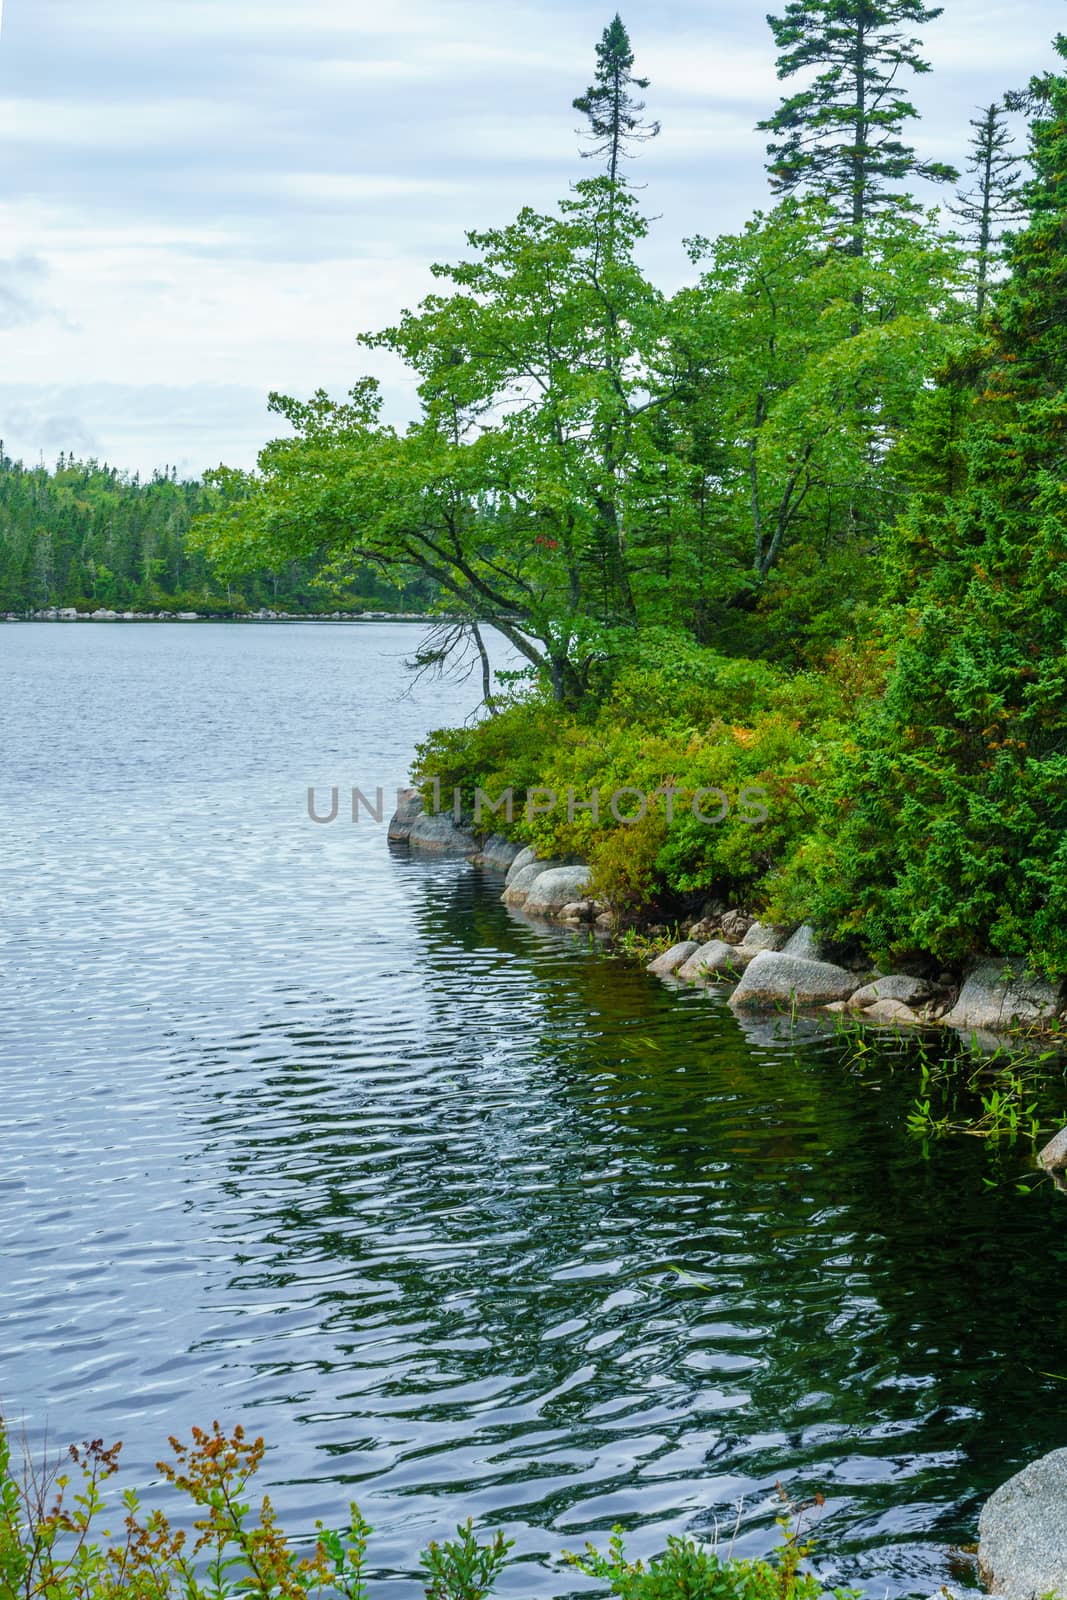 View of the Awalt Lake, in Nova Scotia, Canada